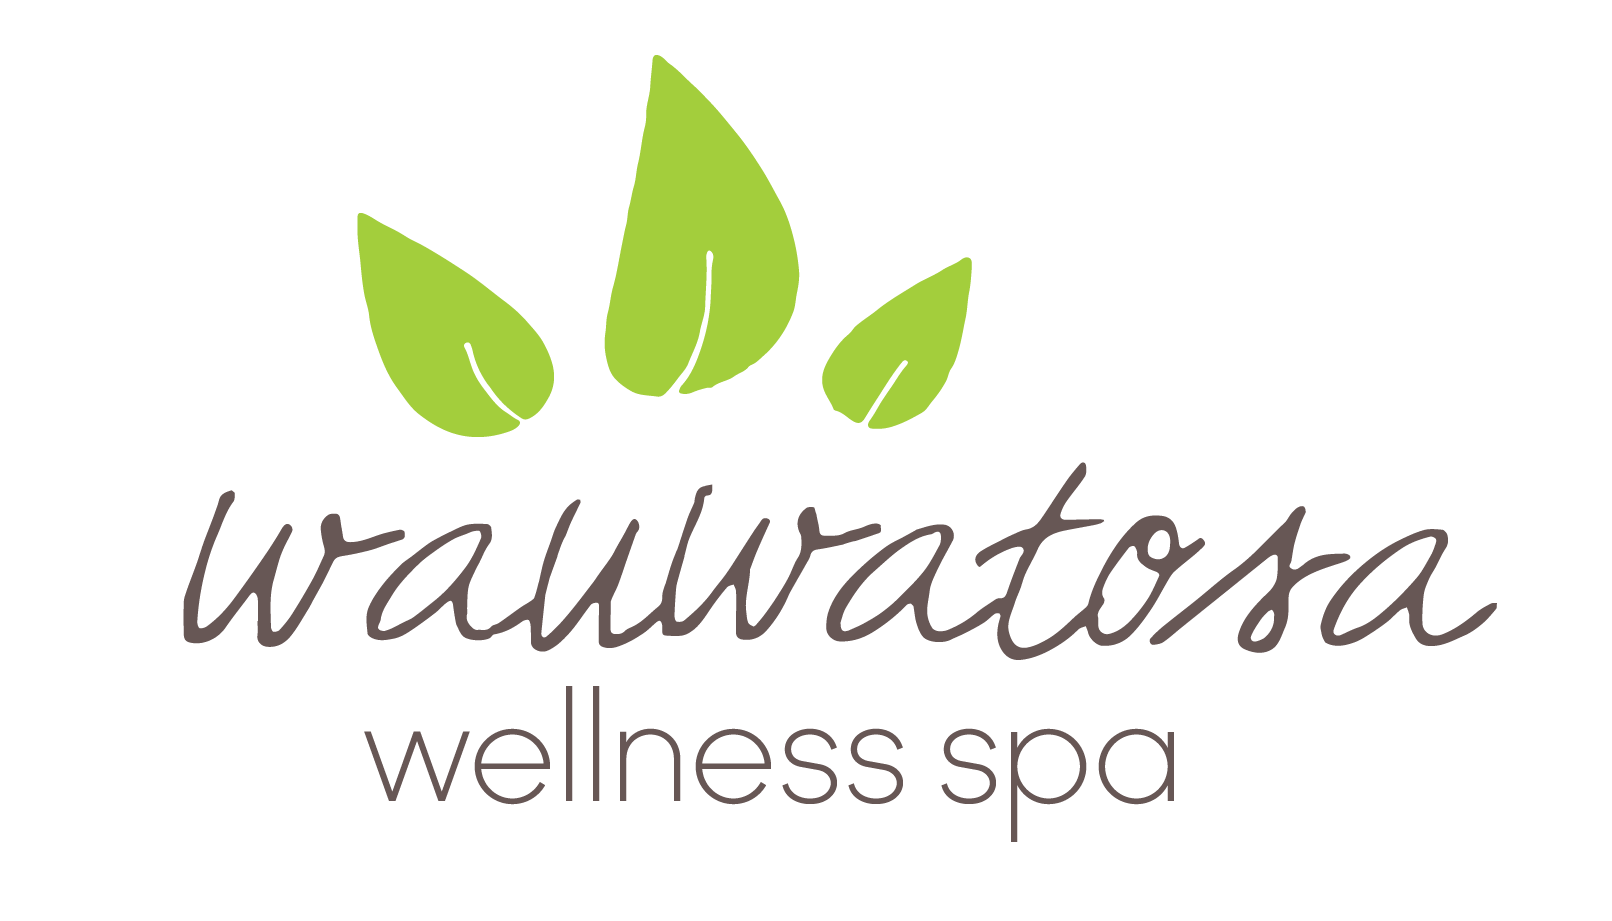 Wauwatosa Wellness Spa